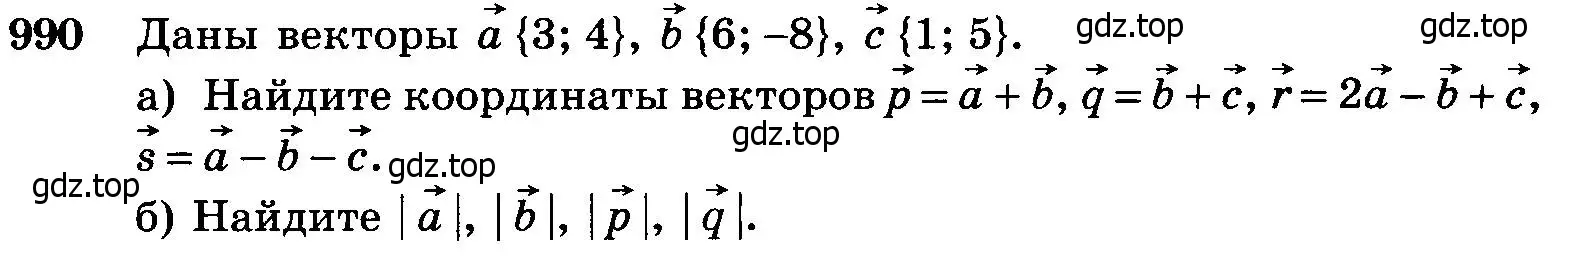 Условие номер 990 (страница 245) гдз по геометрии 7-9 класс Атанасян, Бутузов, учебник